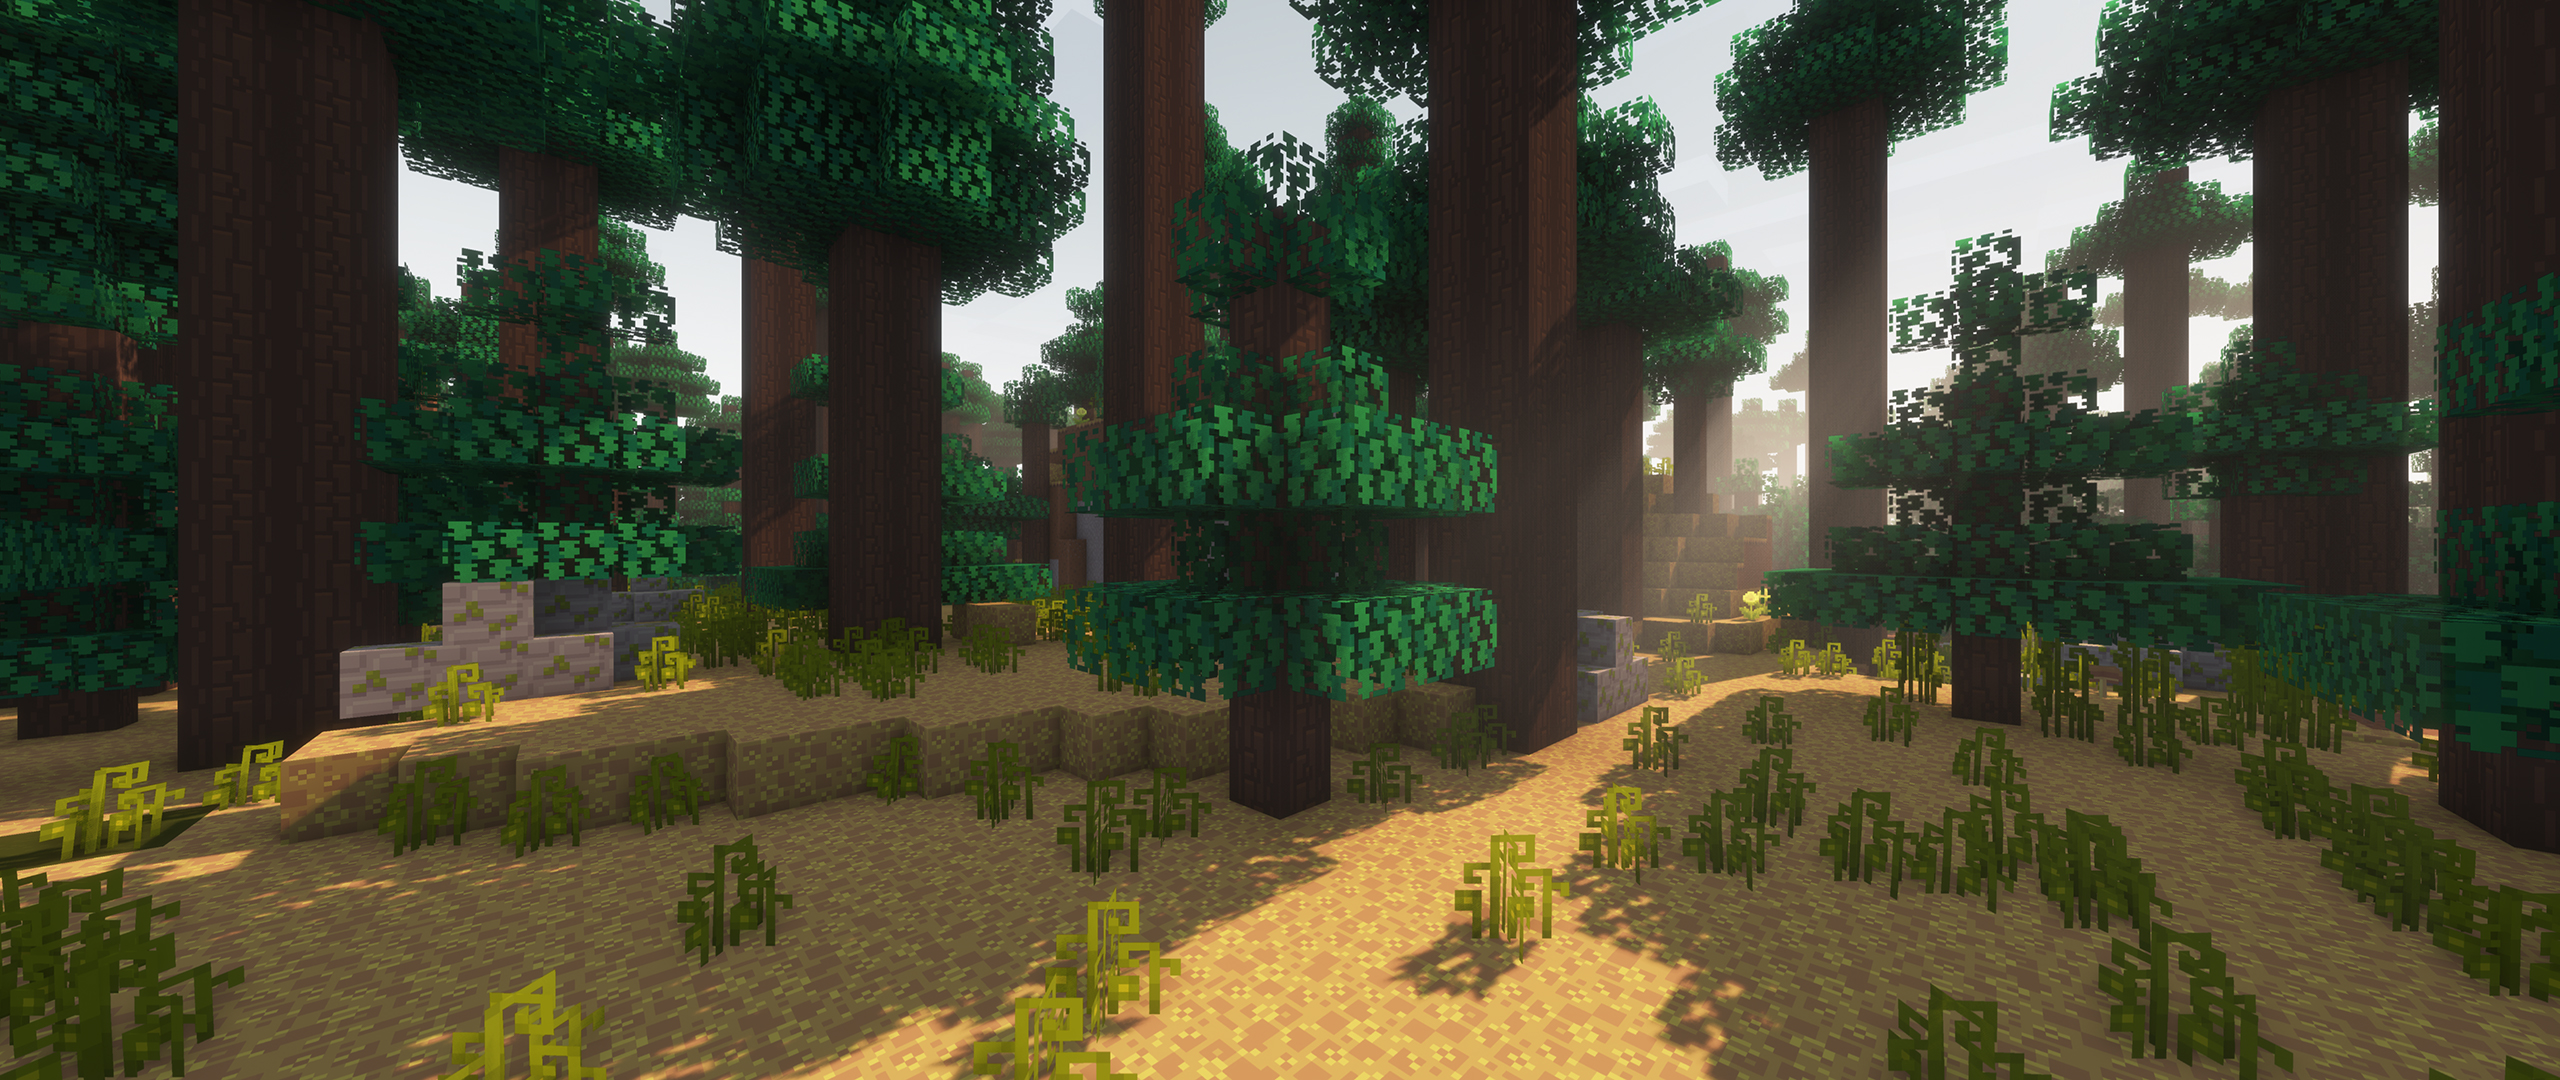 Minecraft Texture Pack - DandelionX - a spruce forest